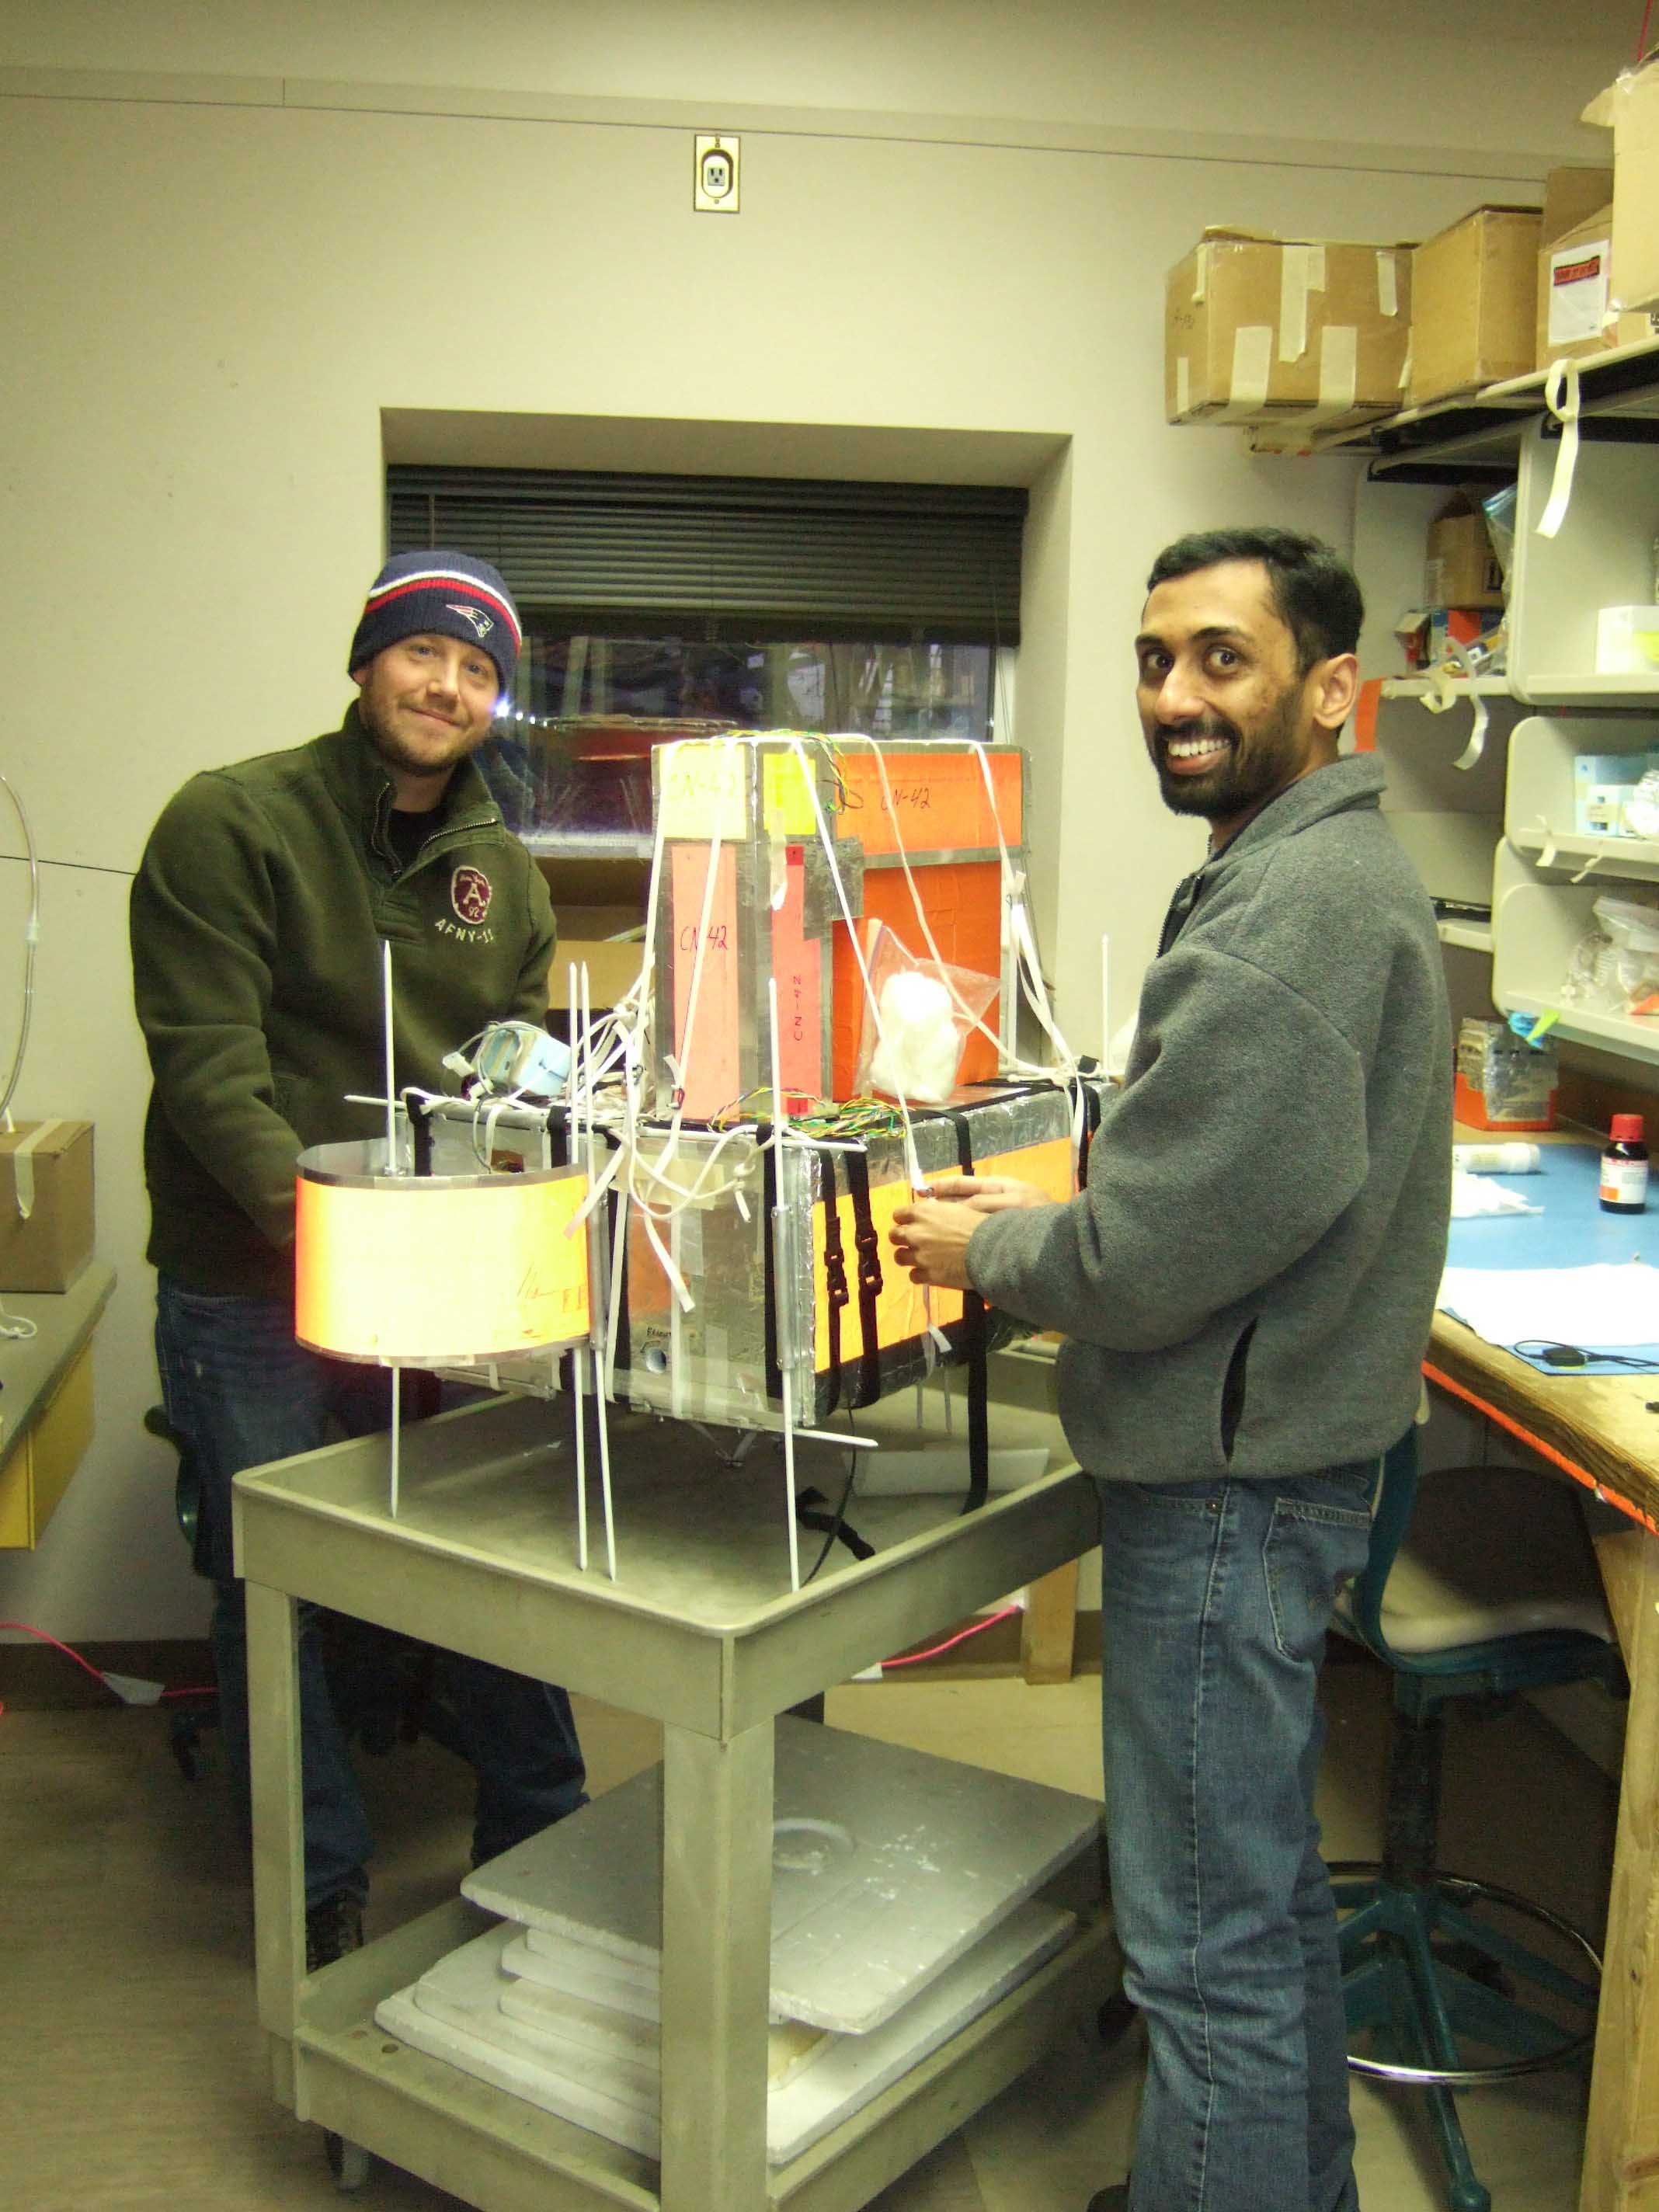 Patrick and Mahesh prepare dual CN instrument